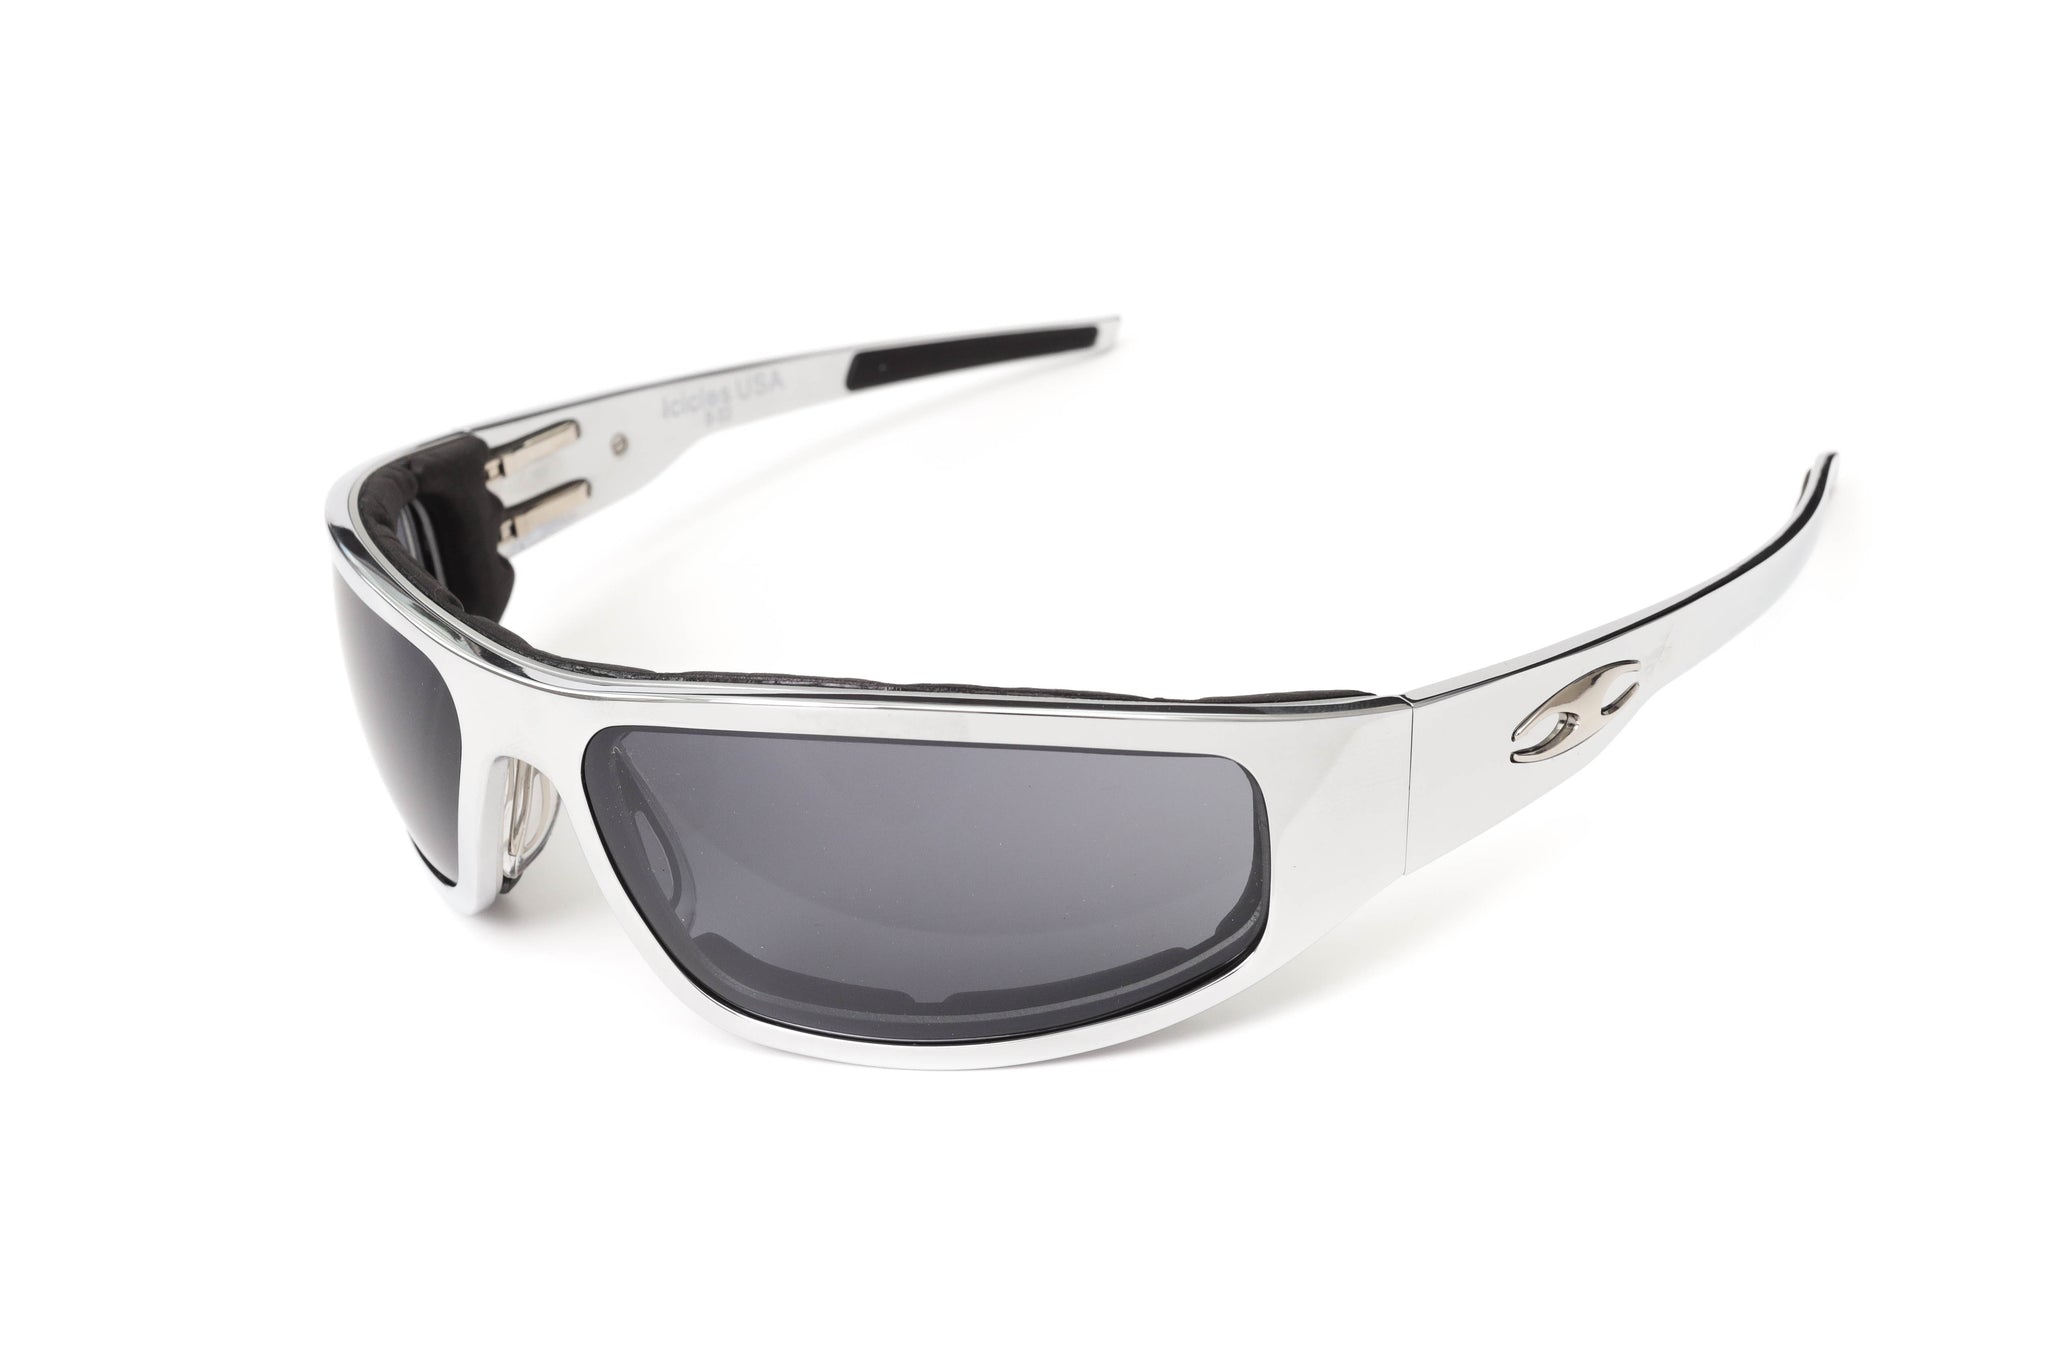 Icicles Eyewear “Bagger” Chrome Motorcycle Sunglasses (Smooth) No - Single / Polarized Mirror - Silver / No